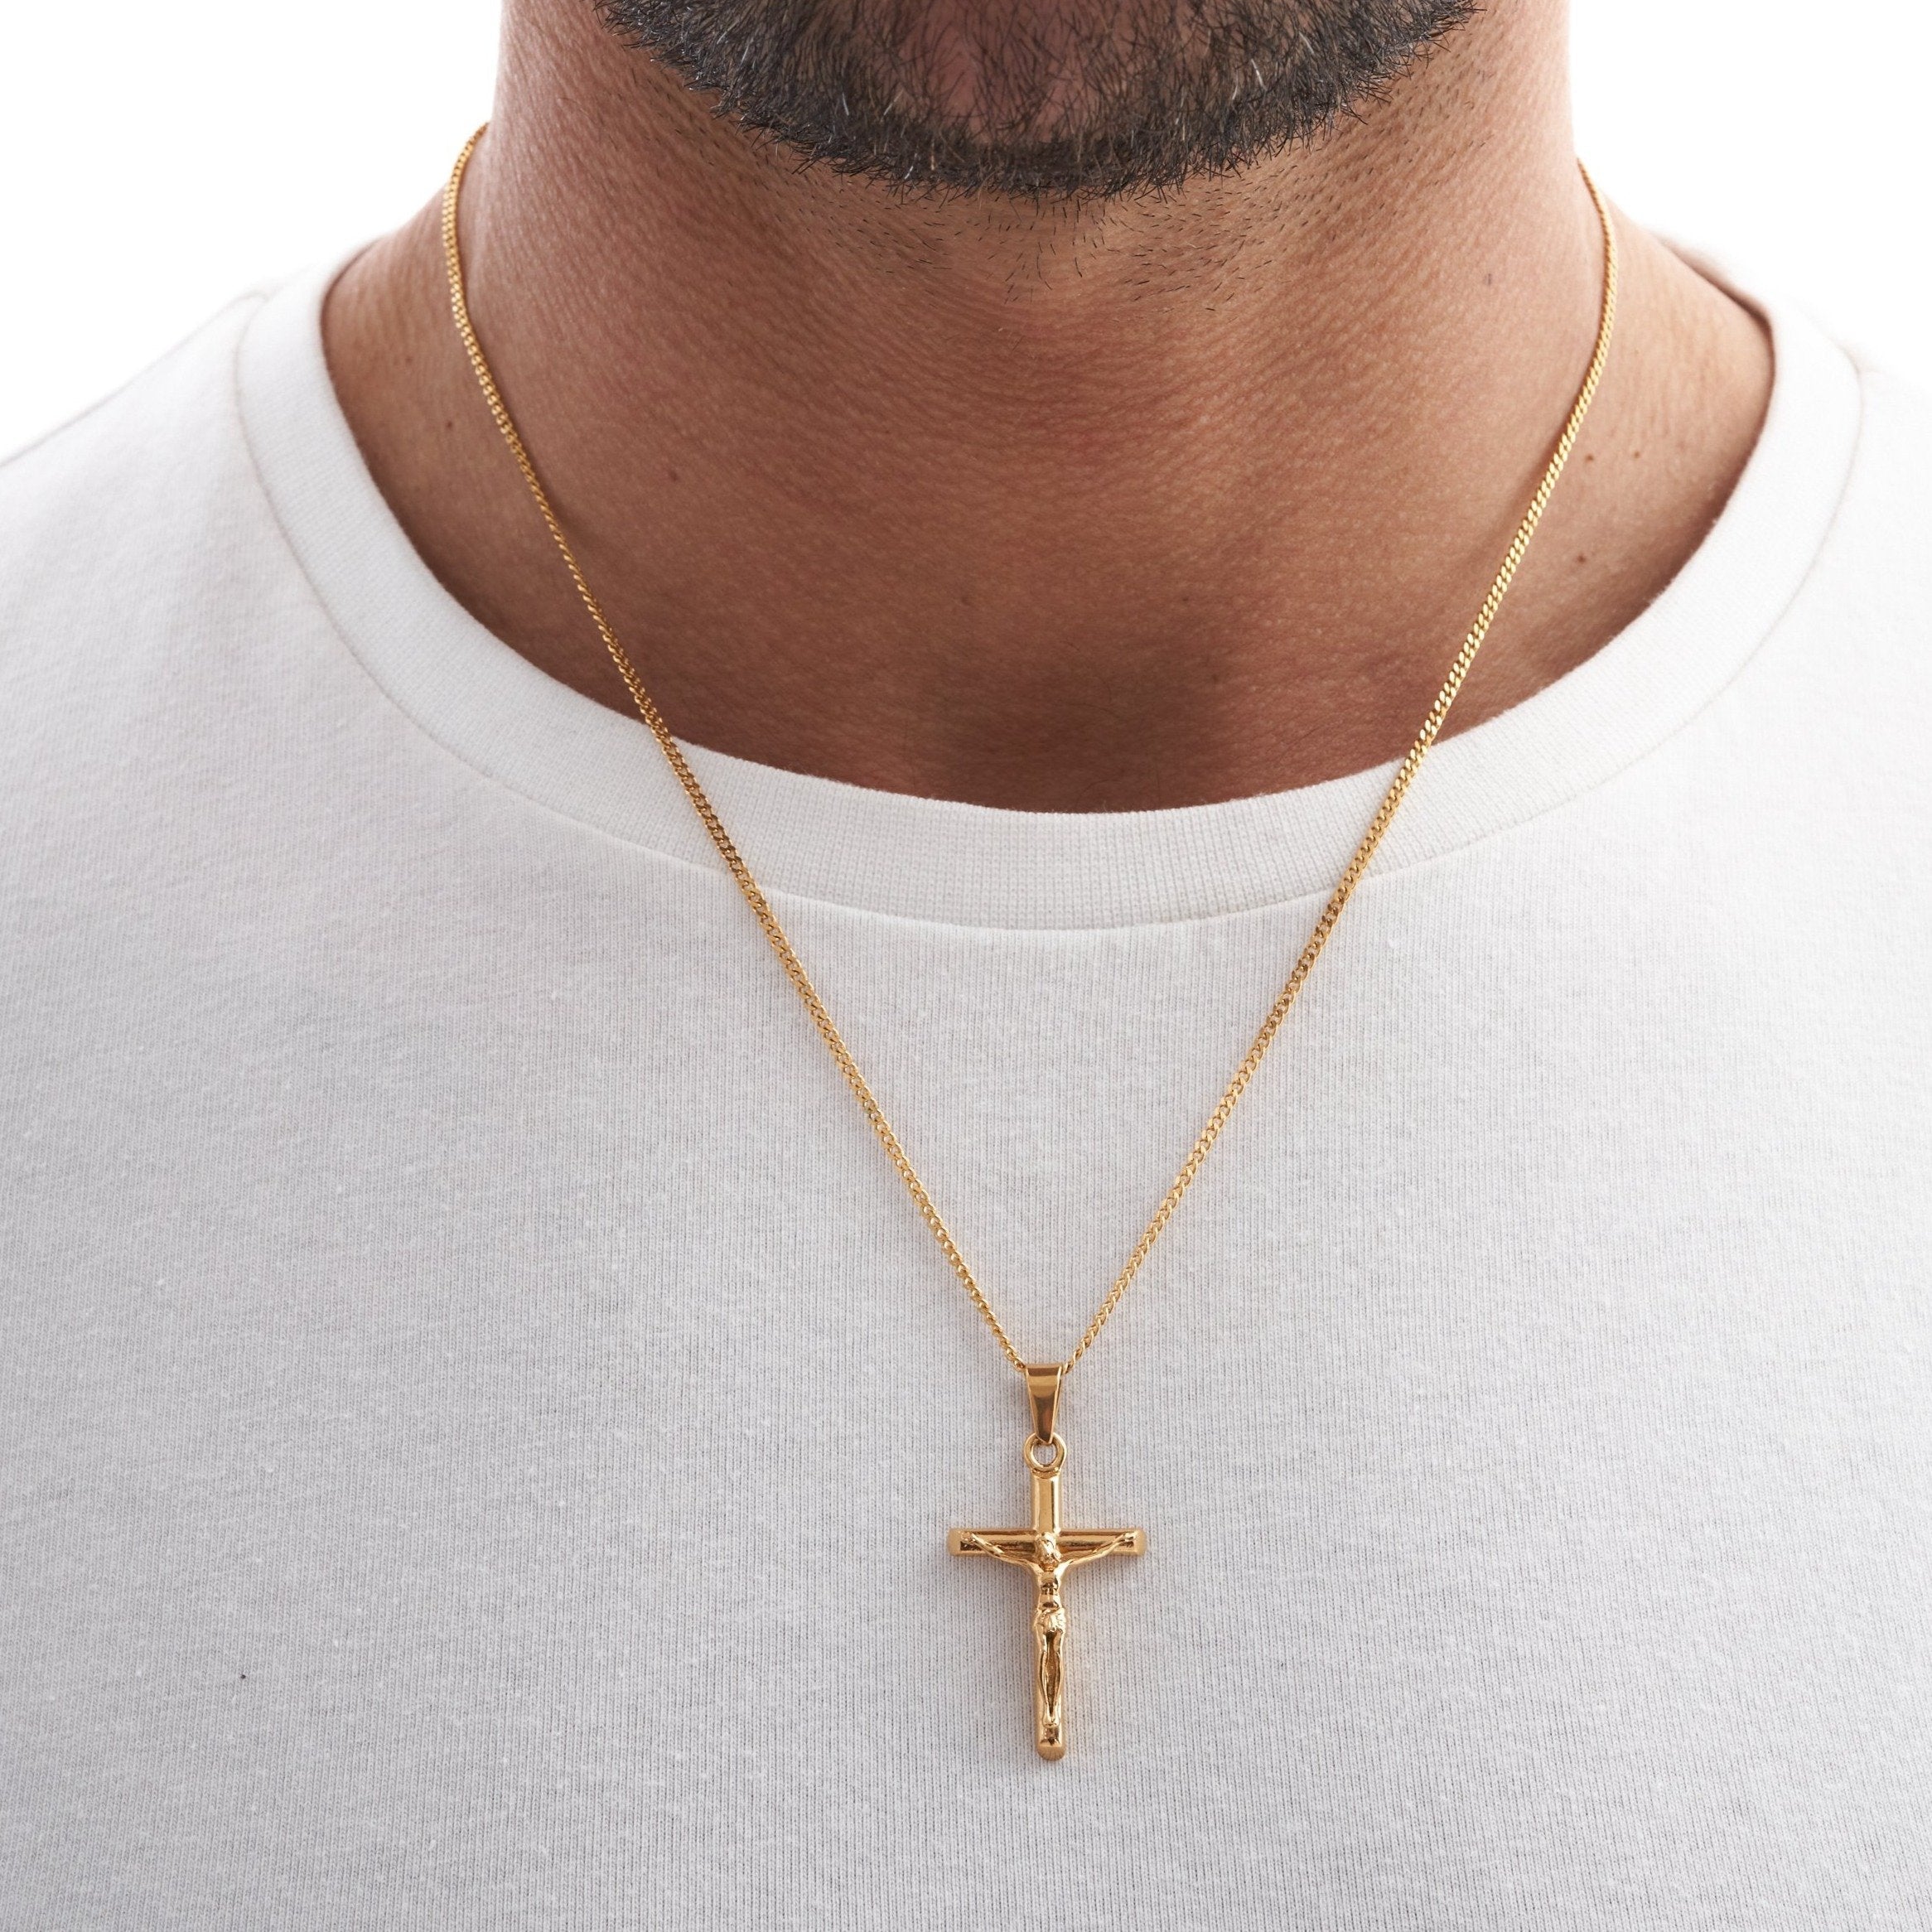 Crucifix Gold Necklace